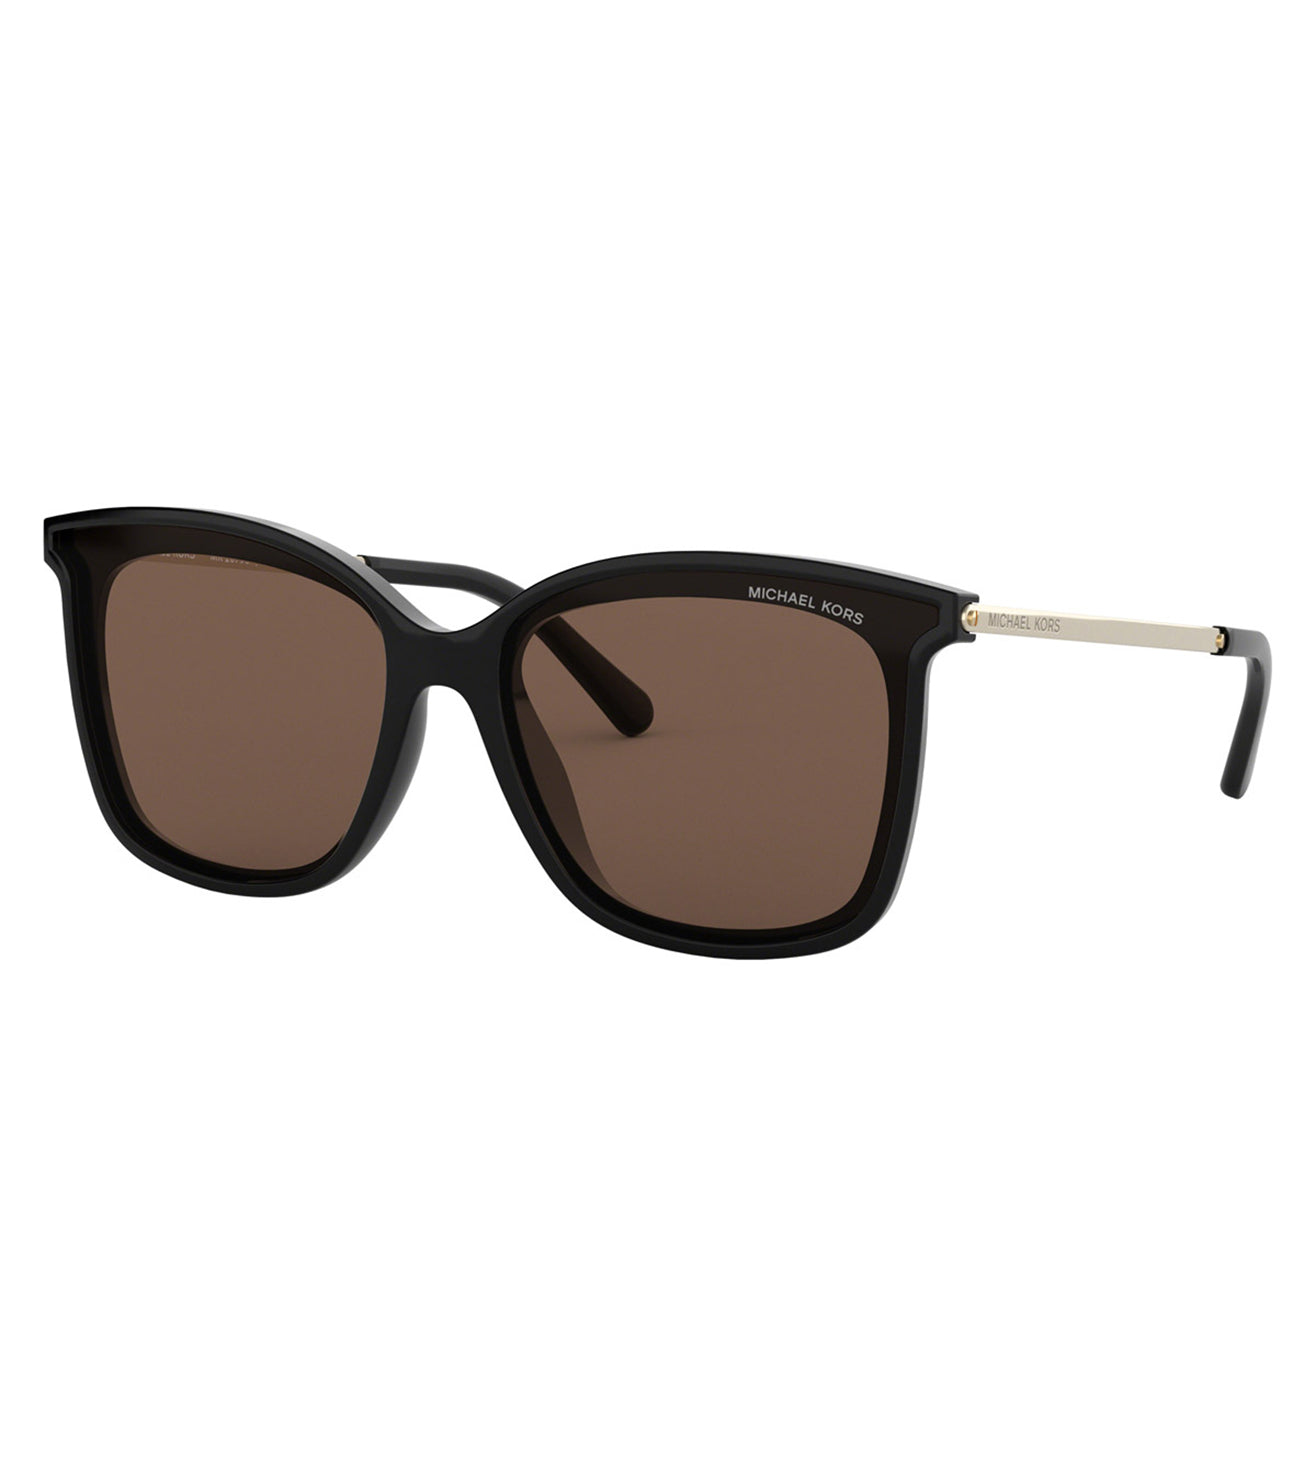 Michael Kors Women's Brown Square Sunglasses